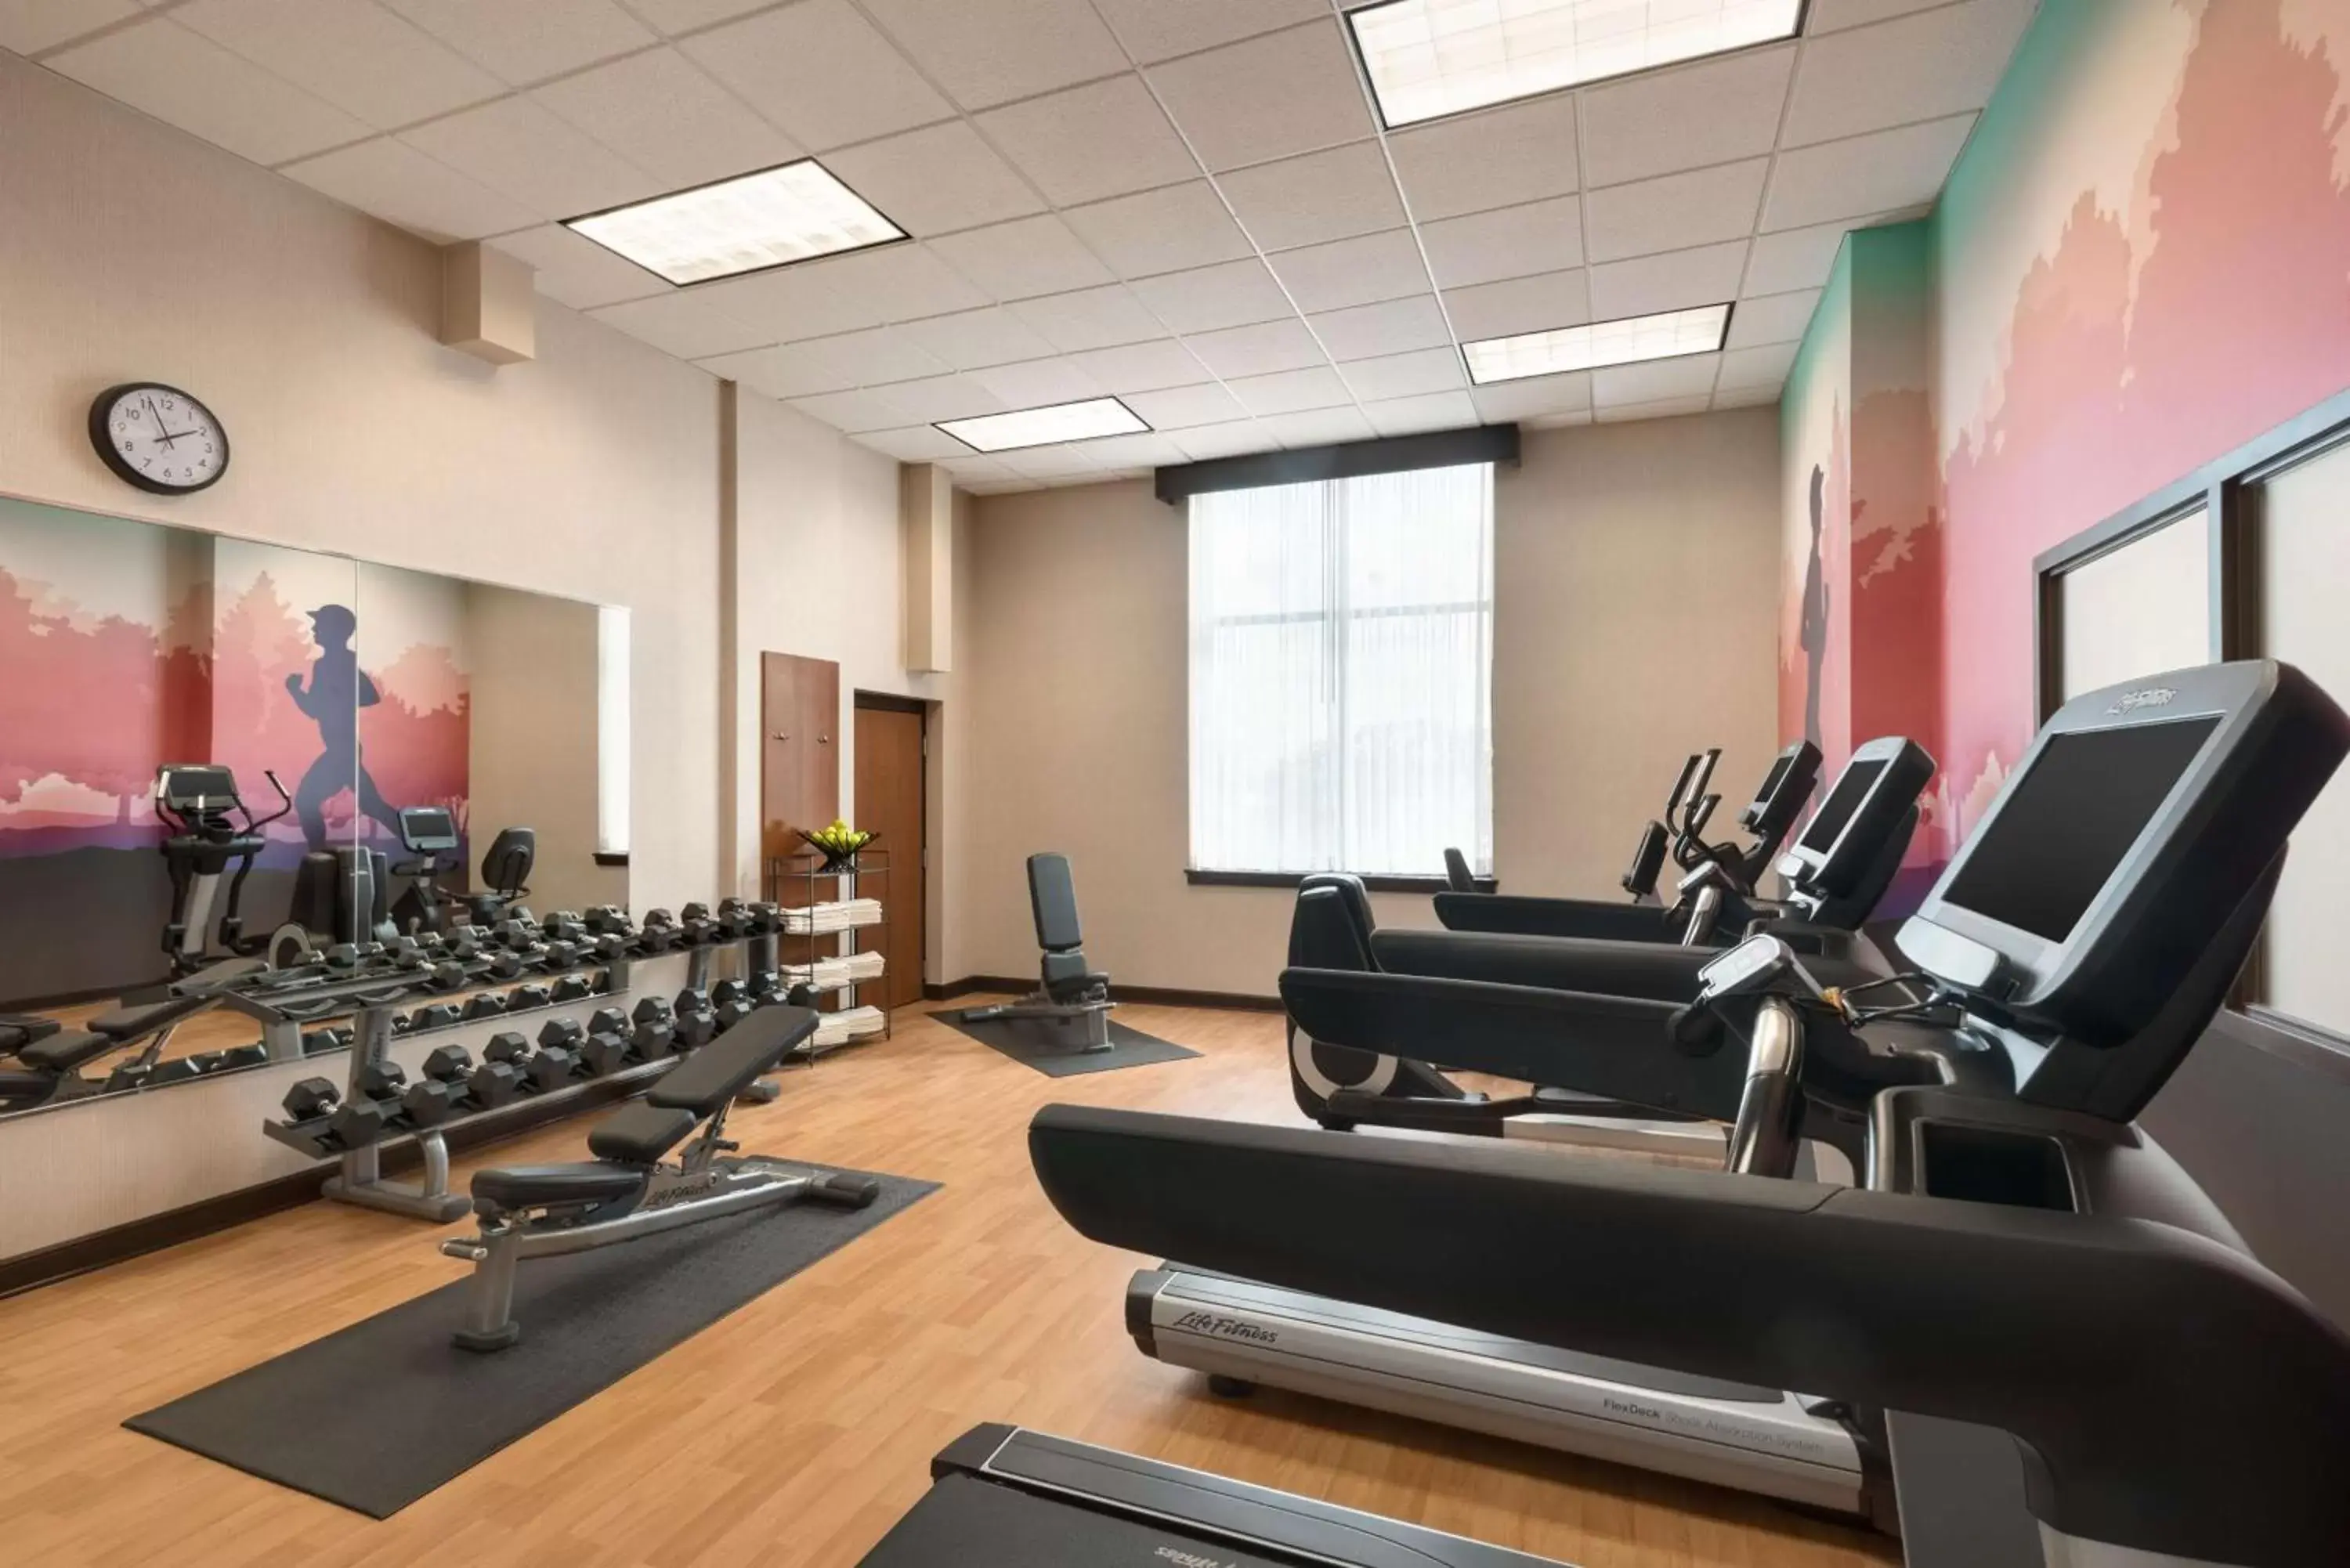 Fitness centre/facilities, Fitness Center/Facilities in Hyatt Place Chicago Schaumburg